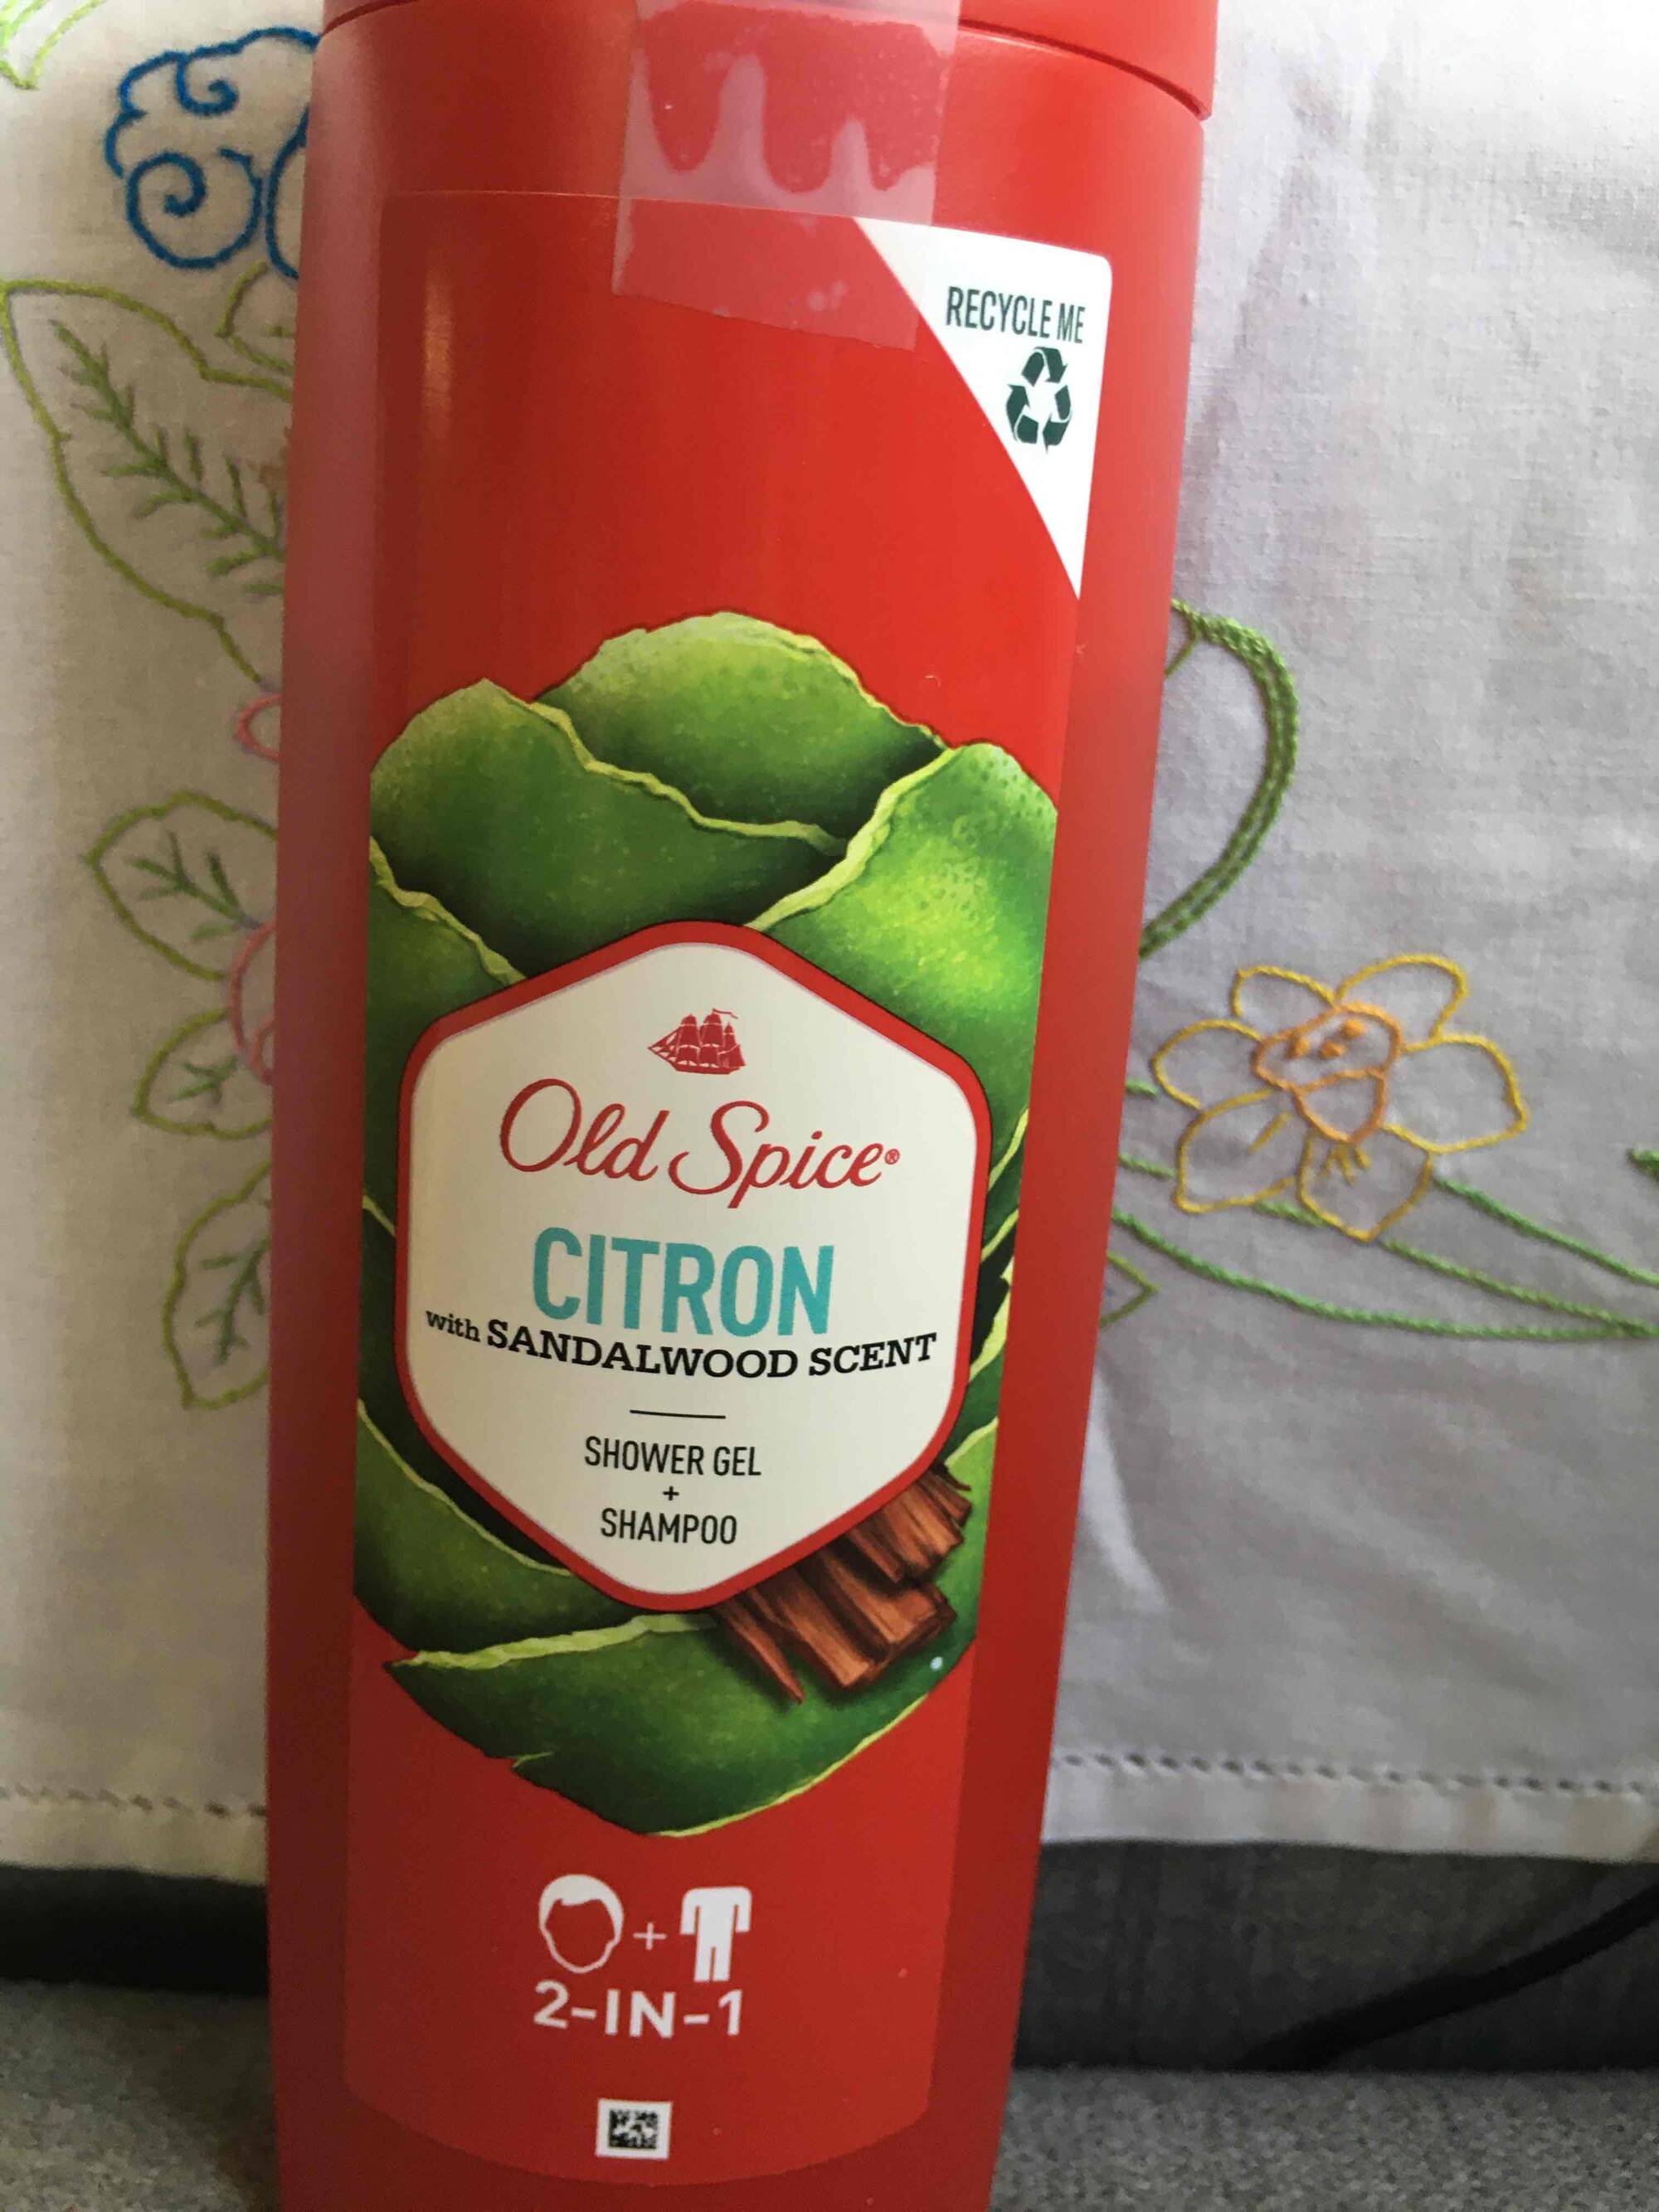 OLD SPICE - Citron - Shower gel + shampoo